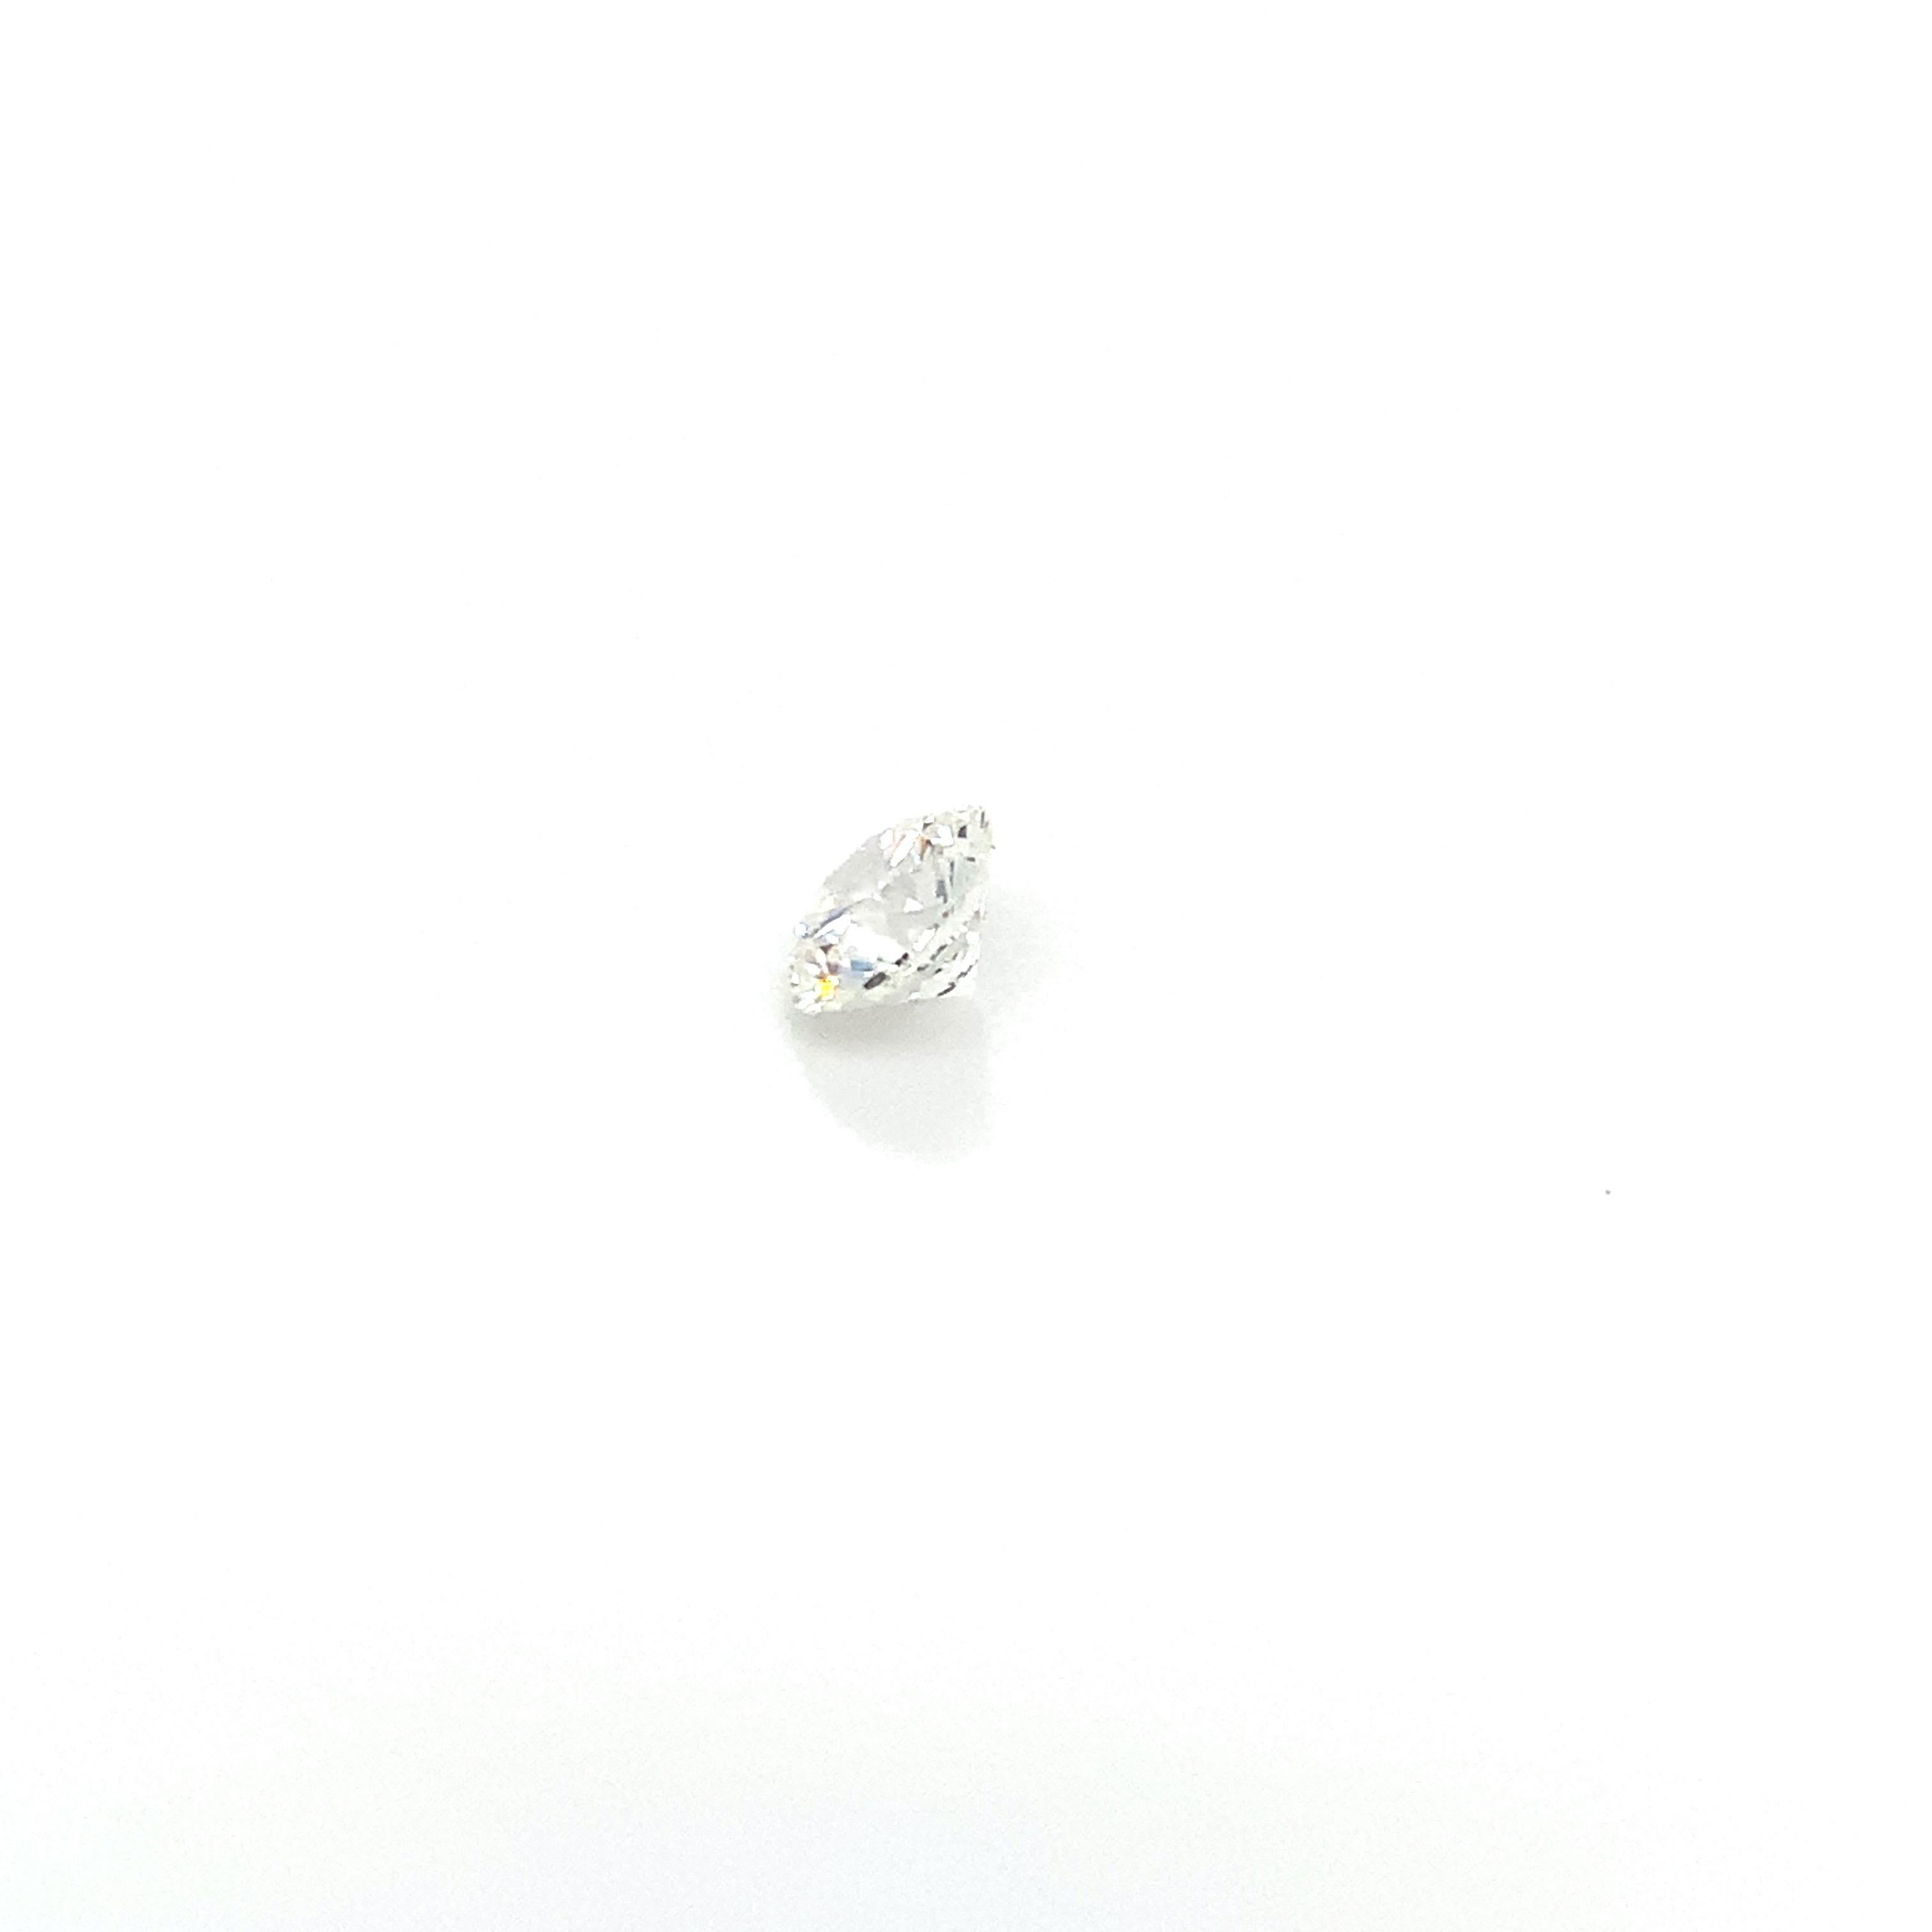 Round Cut GIA Certified 0.60 Carat Round Brilliant Diamond For Sale